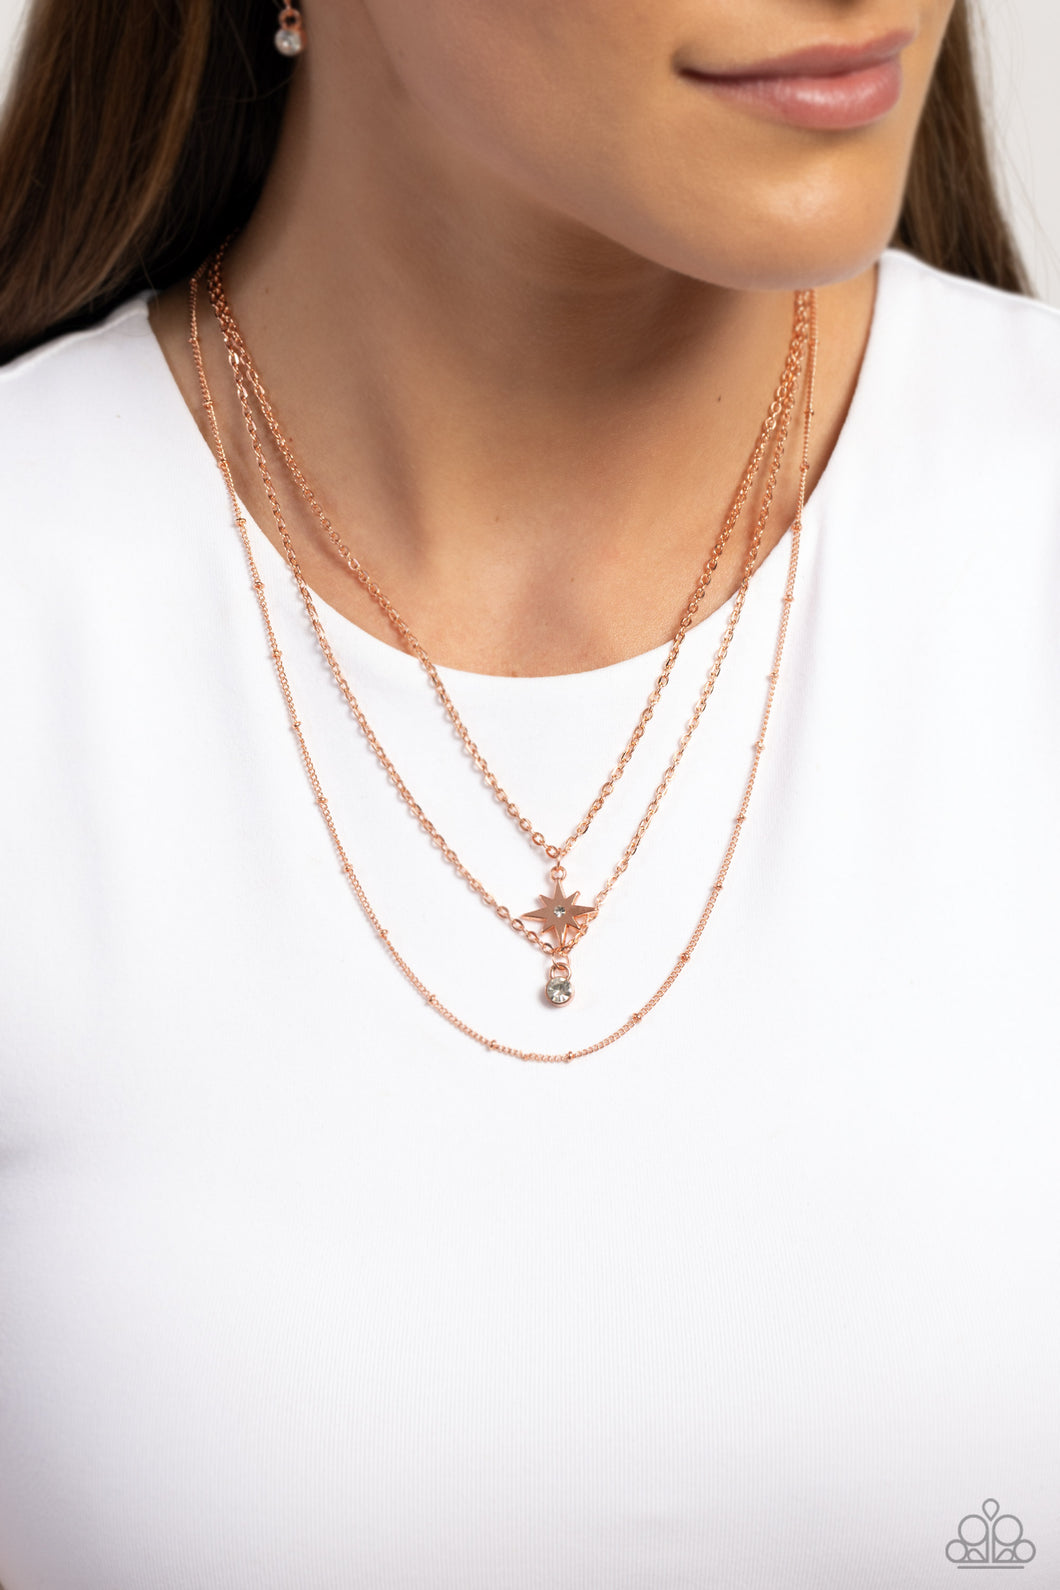 Paparazzi “Trendy Twinkle” Copper Necklace Earring Set